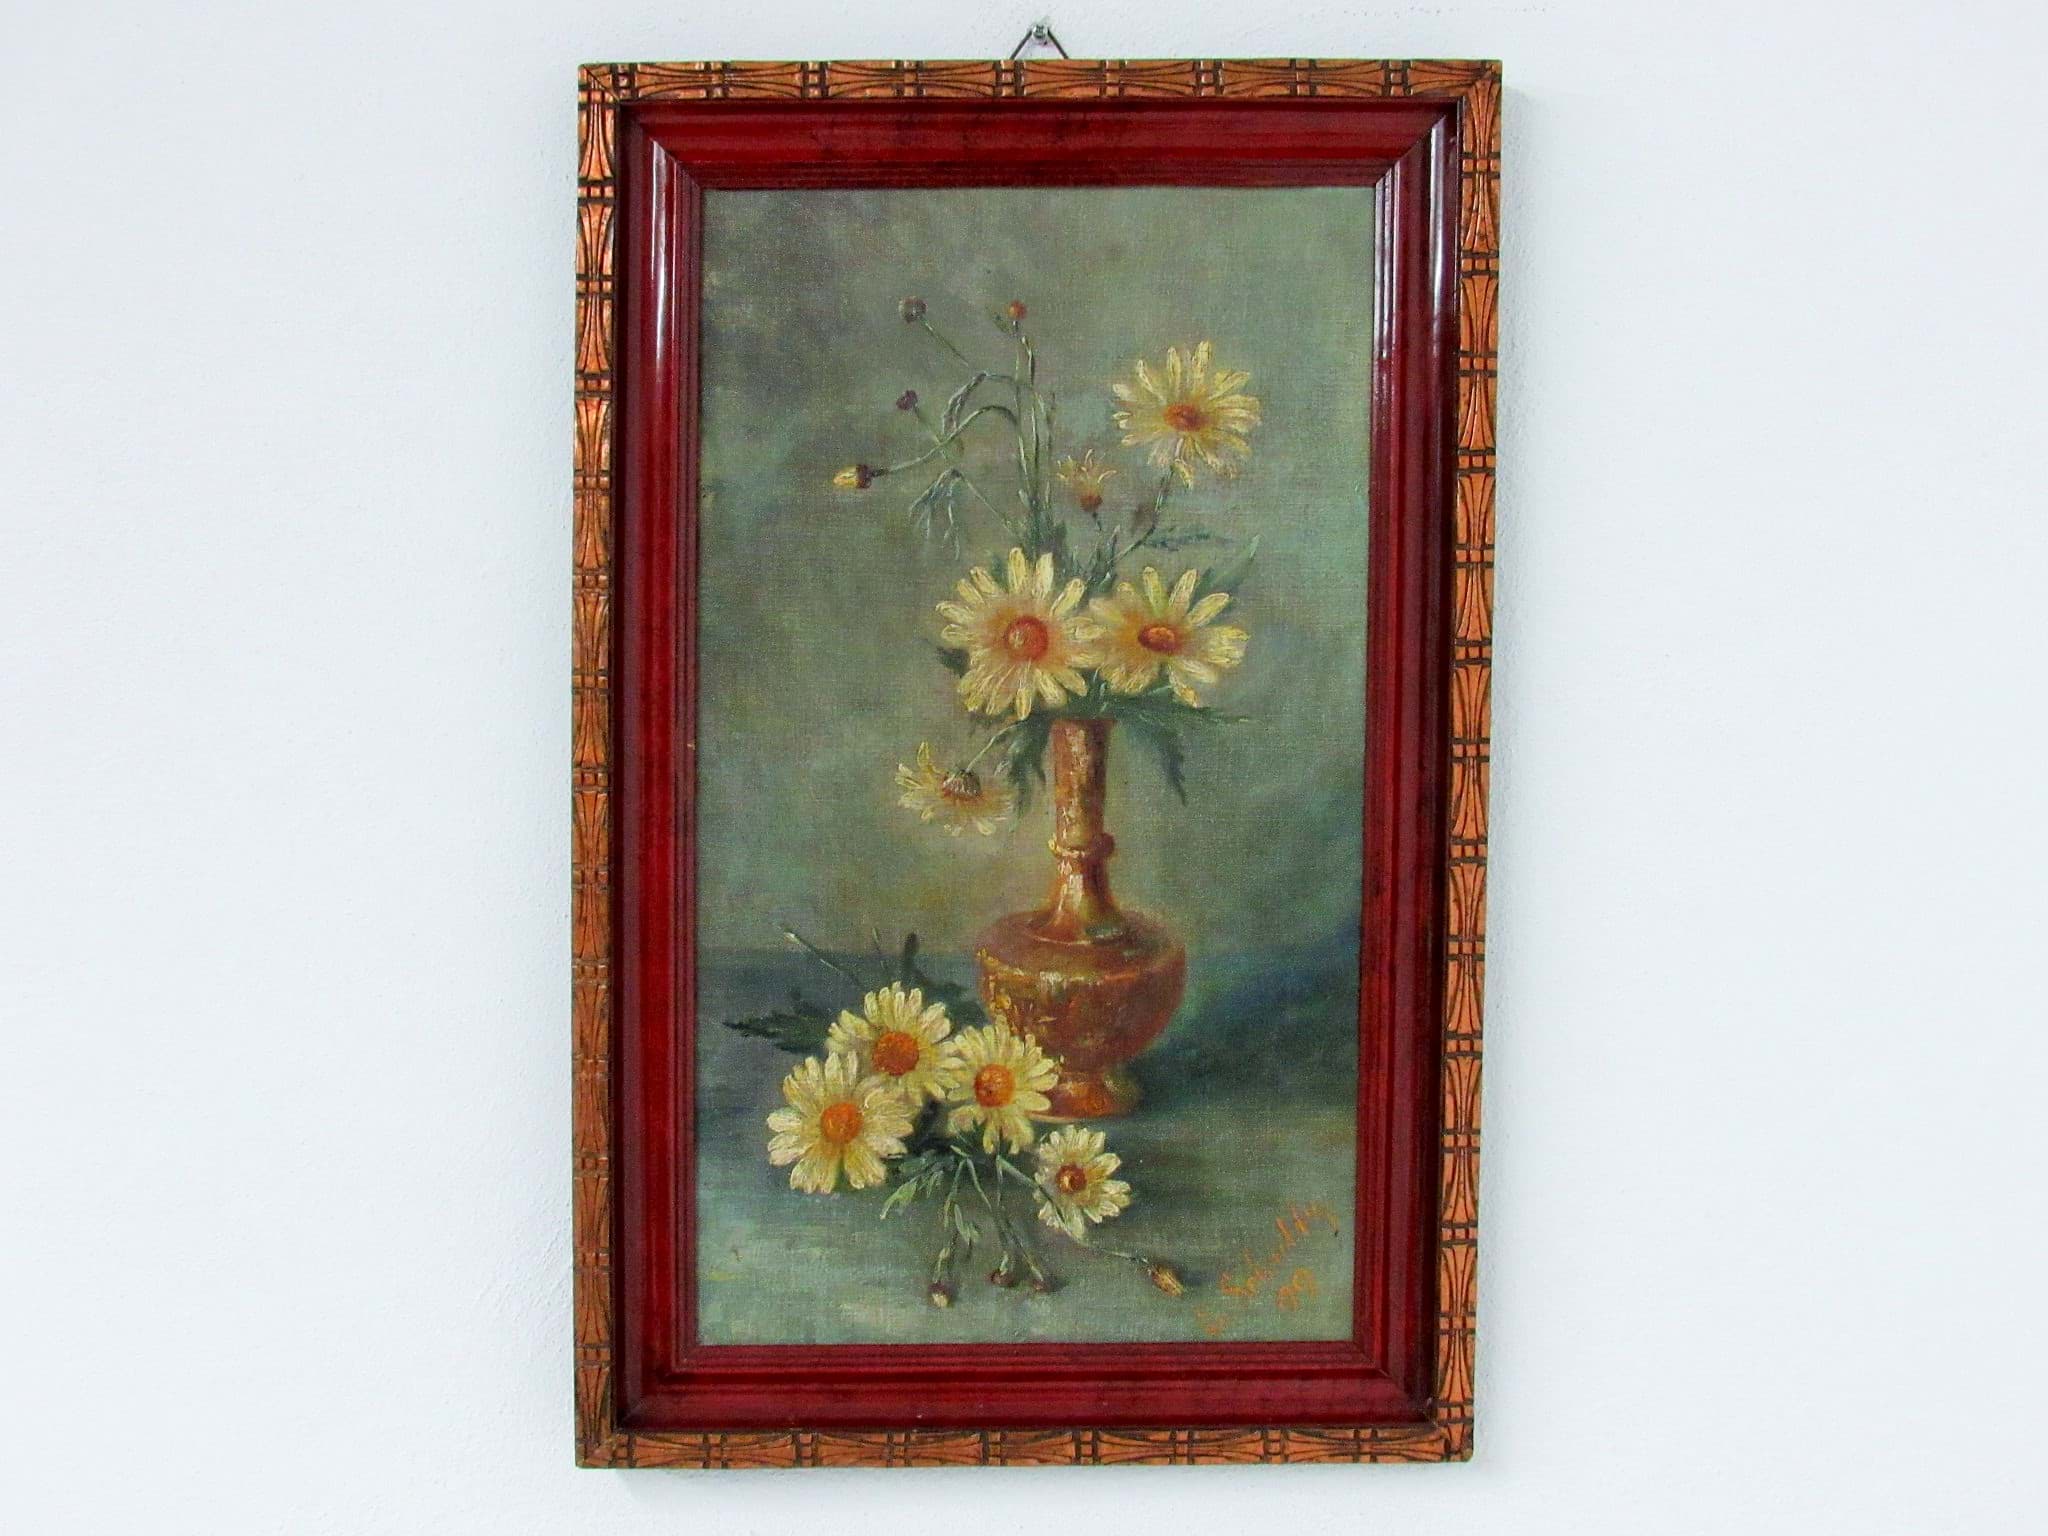 Bild av Antik Gemälde / Ölbild, Blumen Stillleben um 1900, Öl/Malkarton, gerahmt, signiert E. Schultz (?) & datiert
